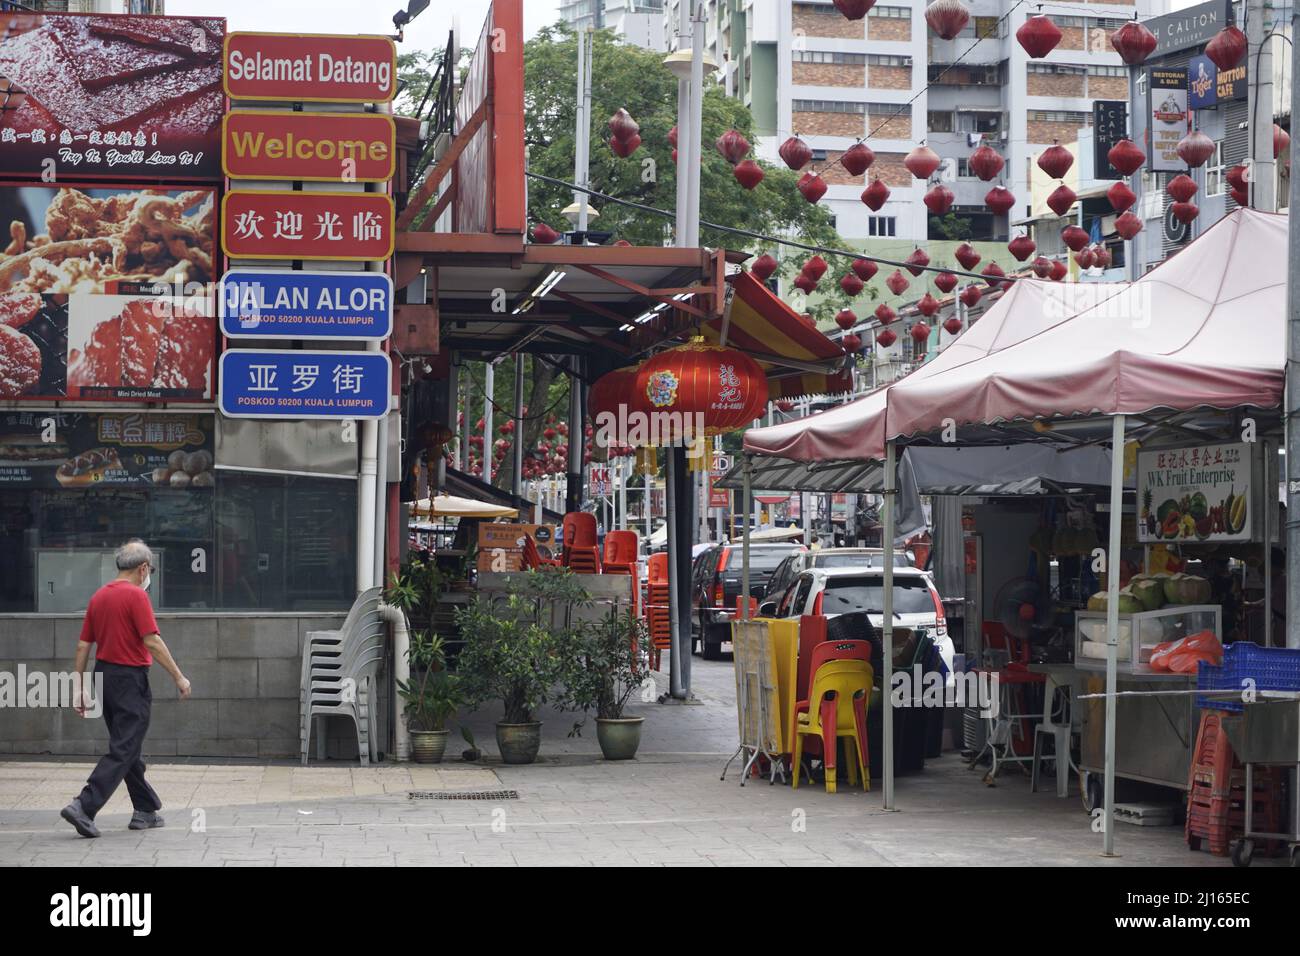 Willkommensschild in der Jalan Alor Food Street, Bukit Bintang, Malaysia Stockfoto